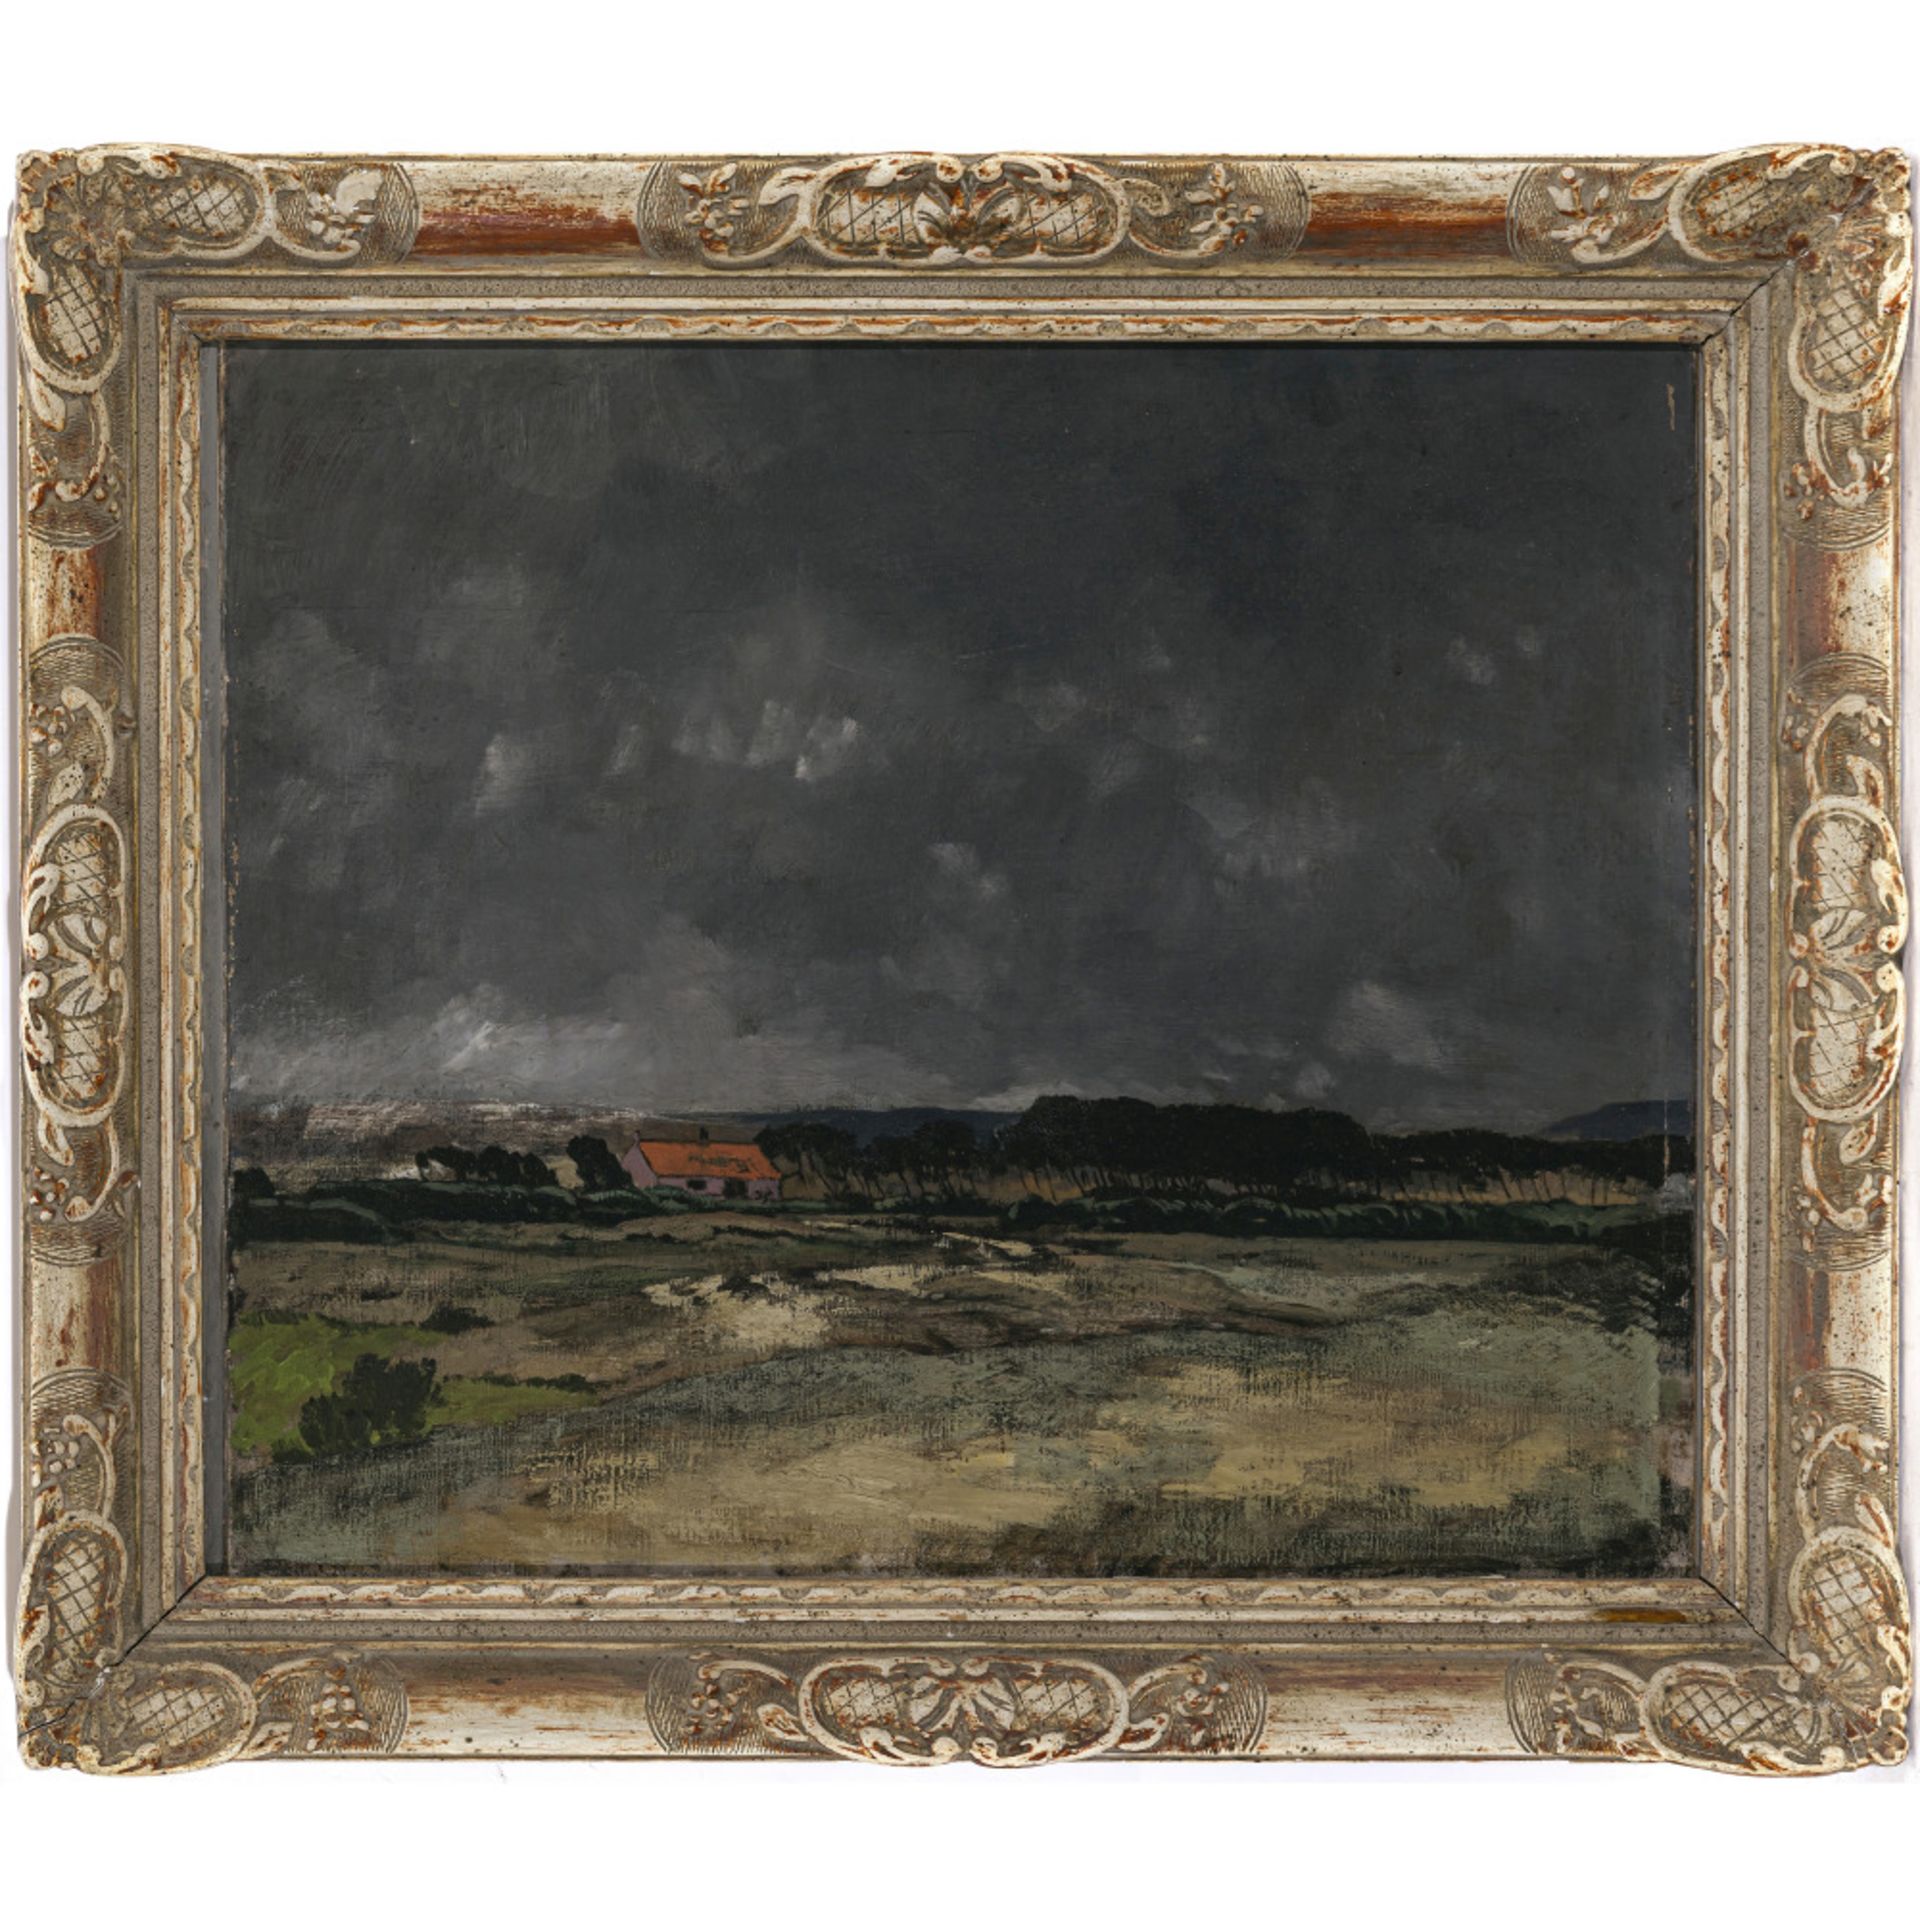 Toni (Anton) von Stadler - Landscape with approaching storm - Image 2 of 2